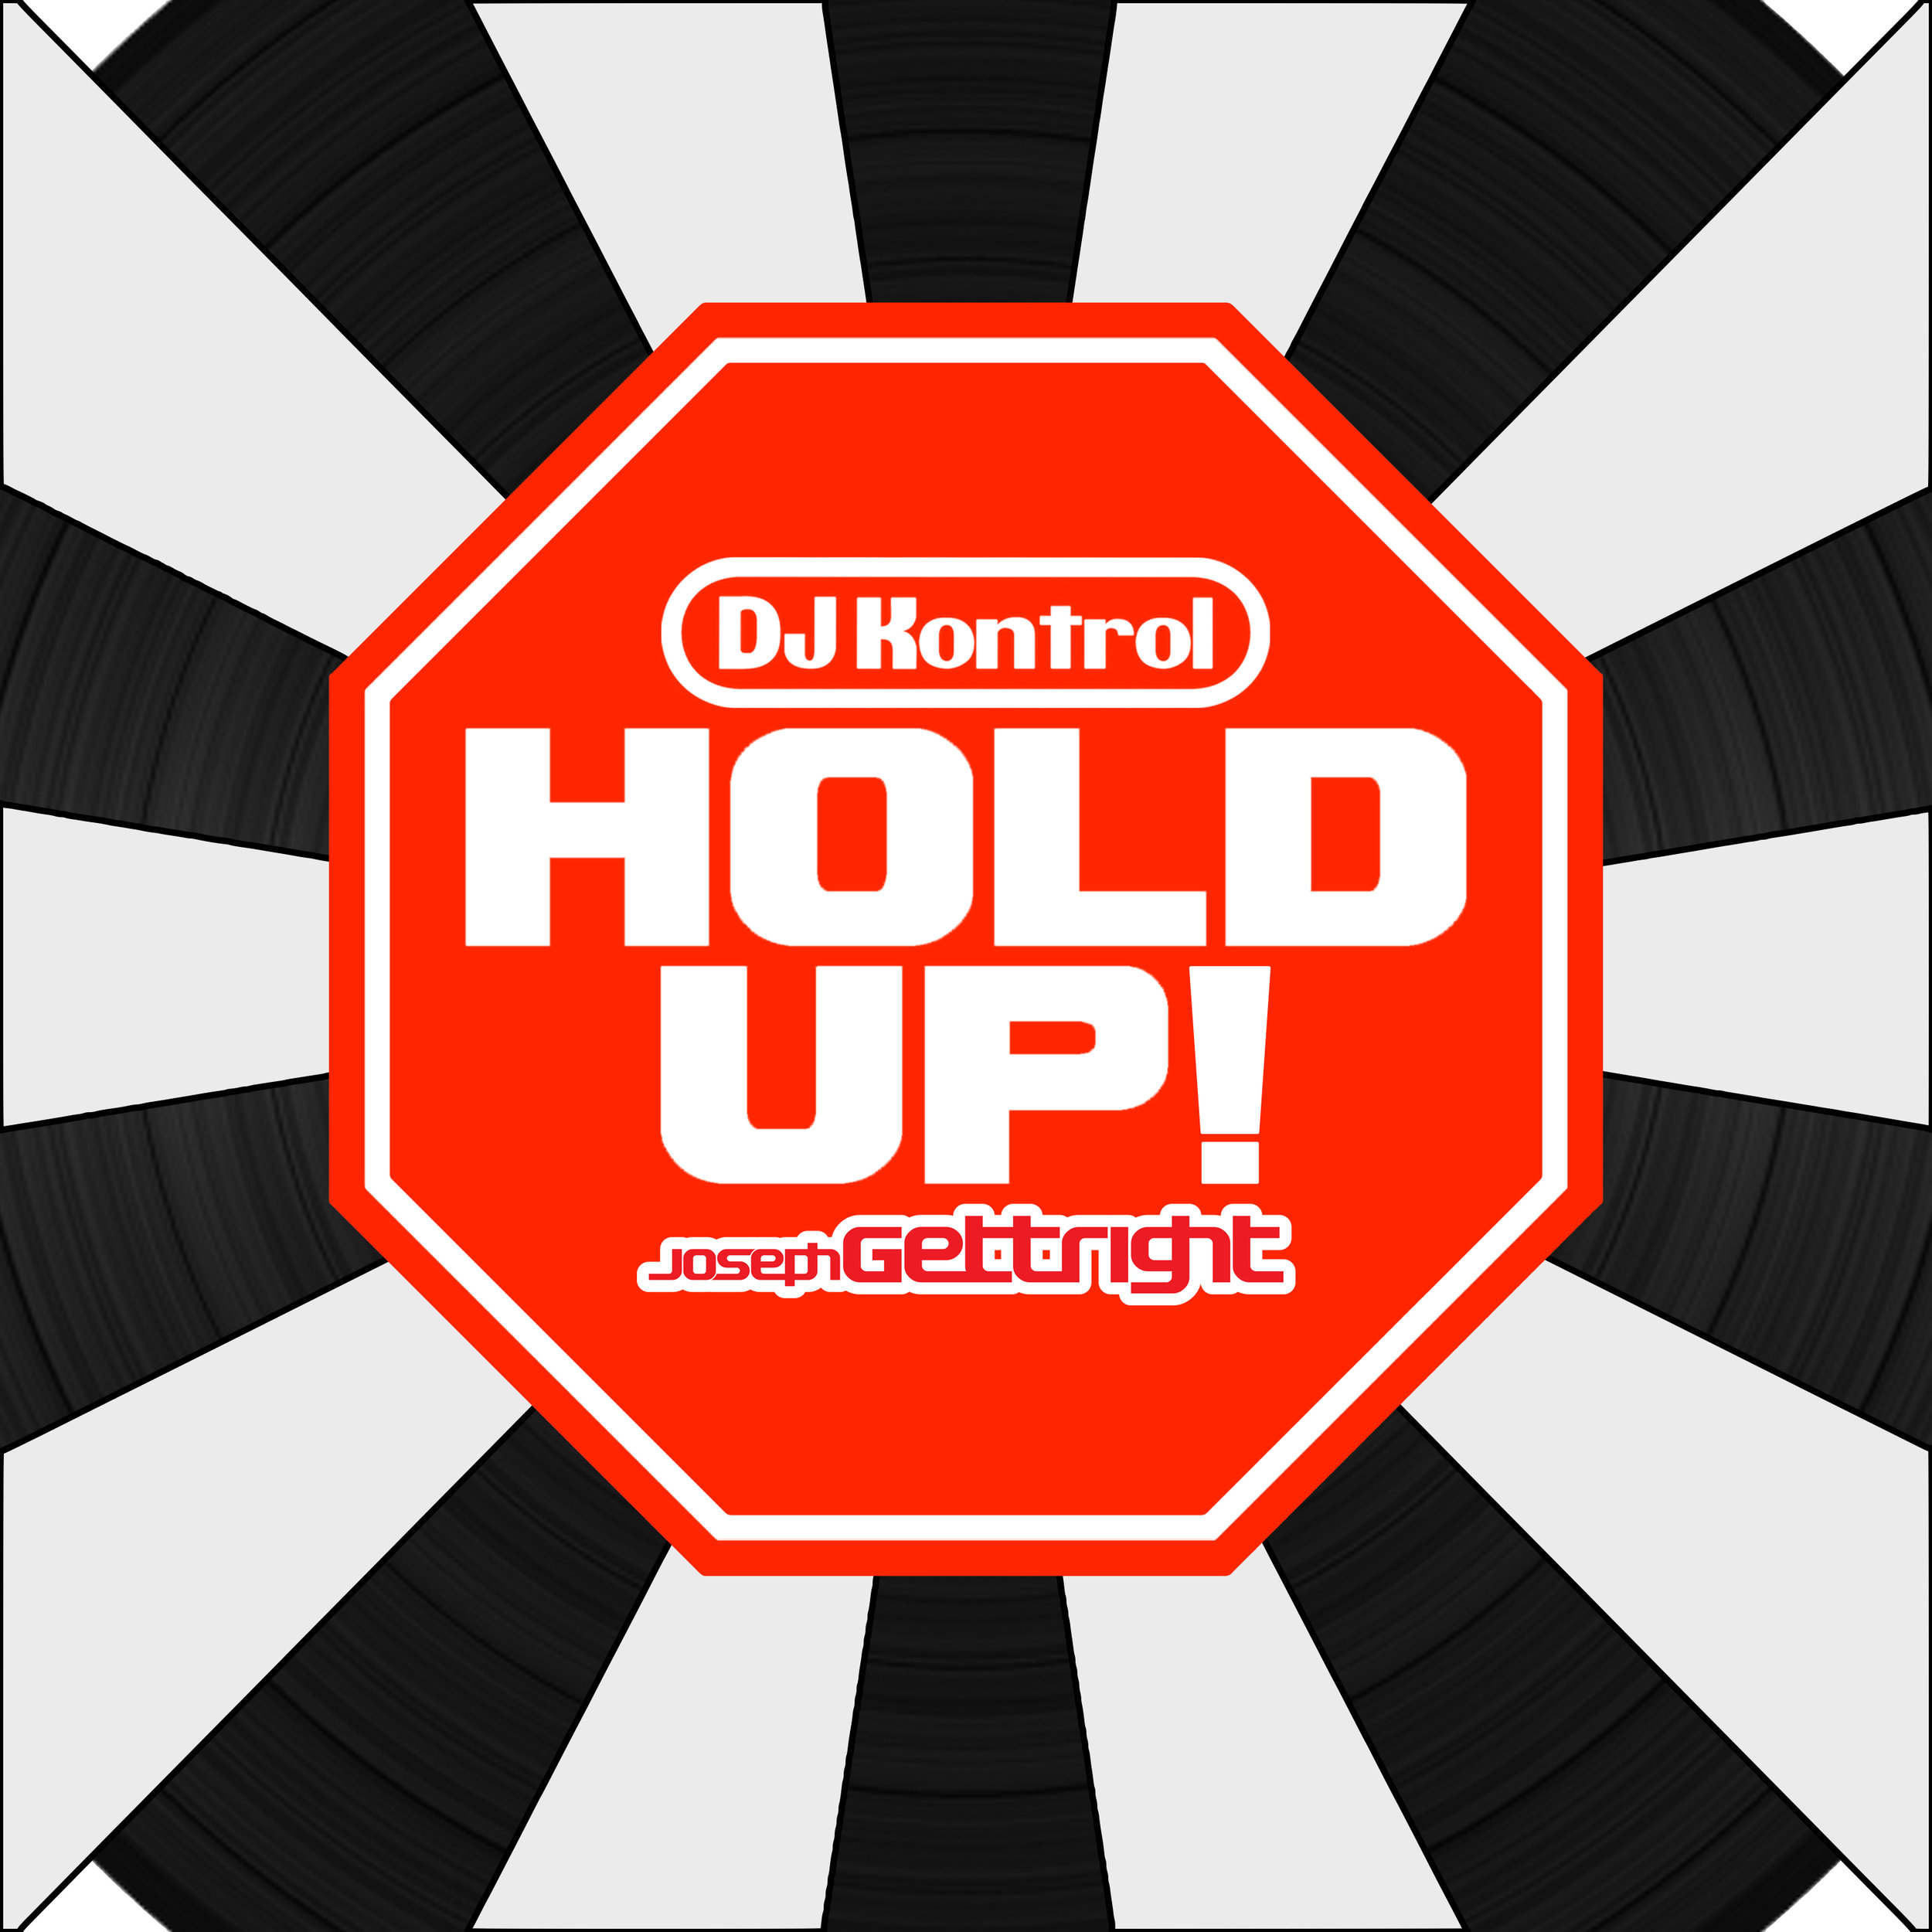 DJ Kontrol & Joseph Gettright - Hold Up!